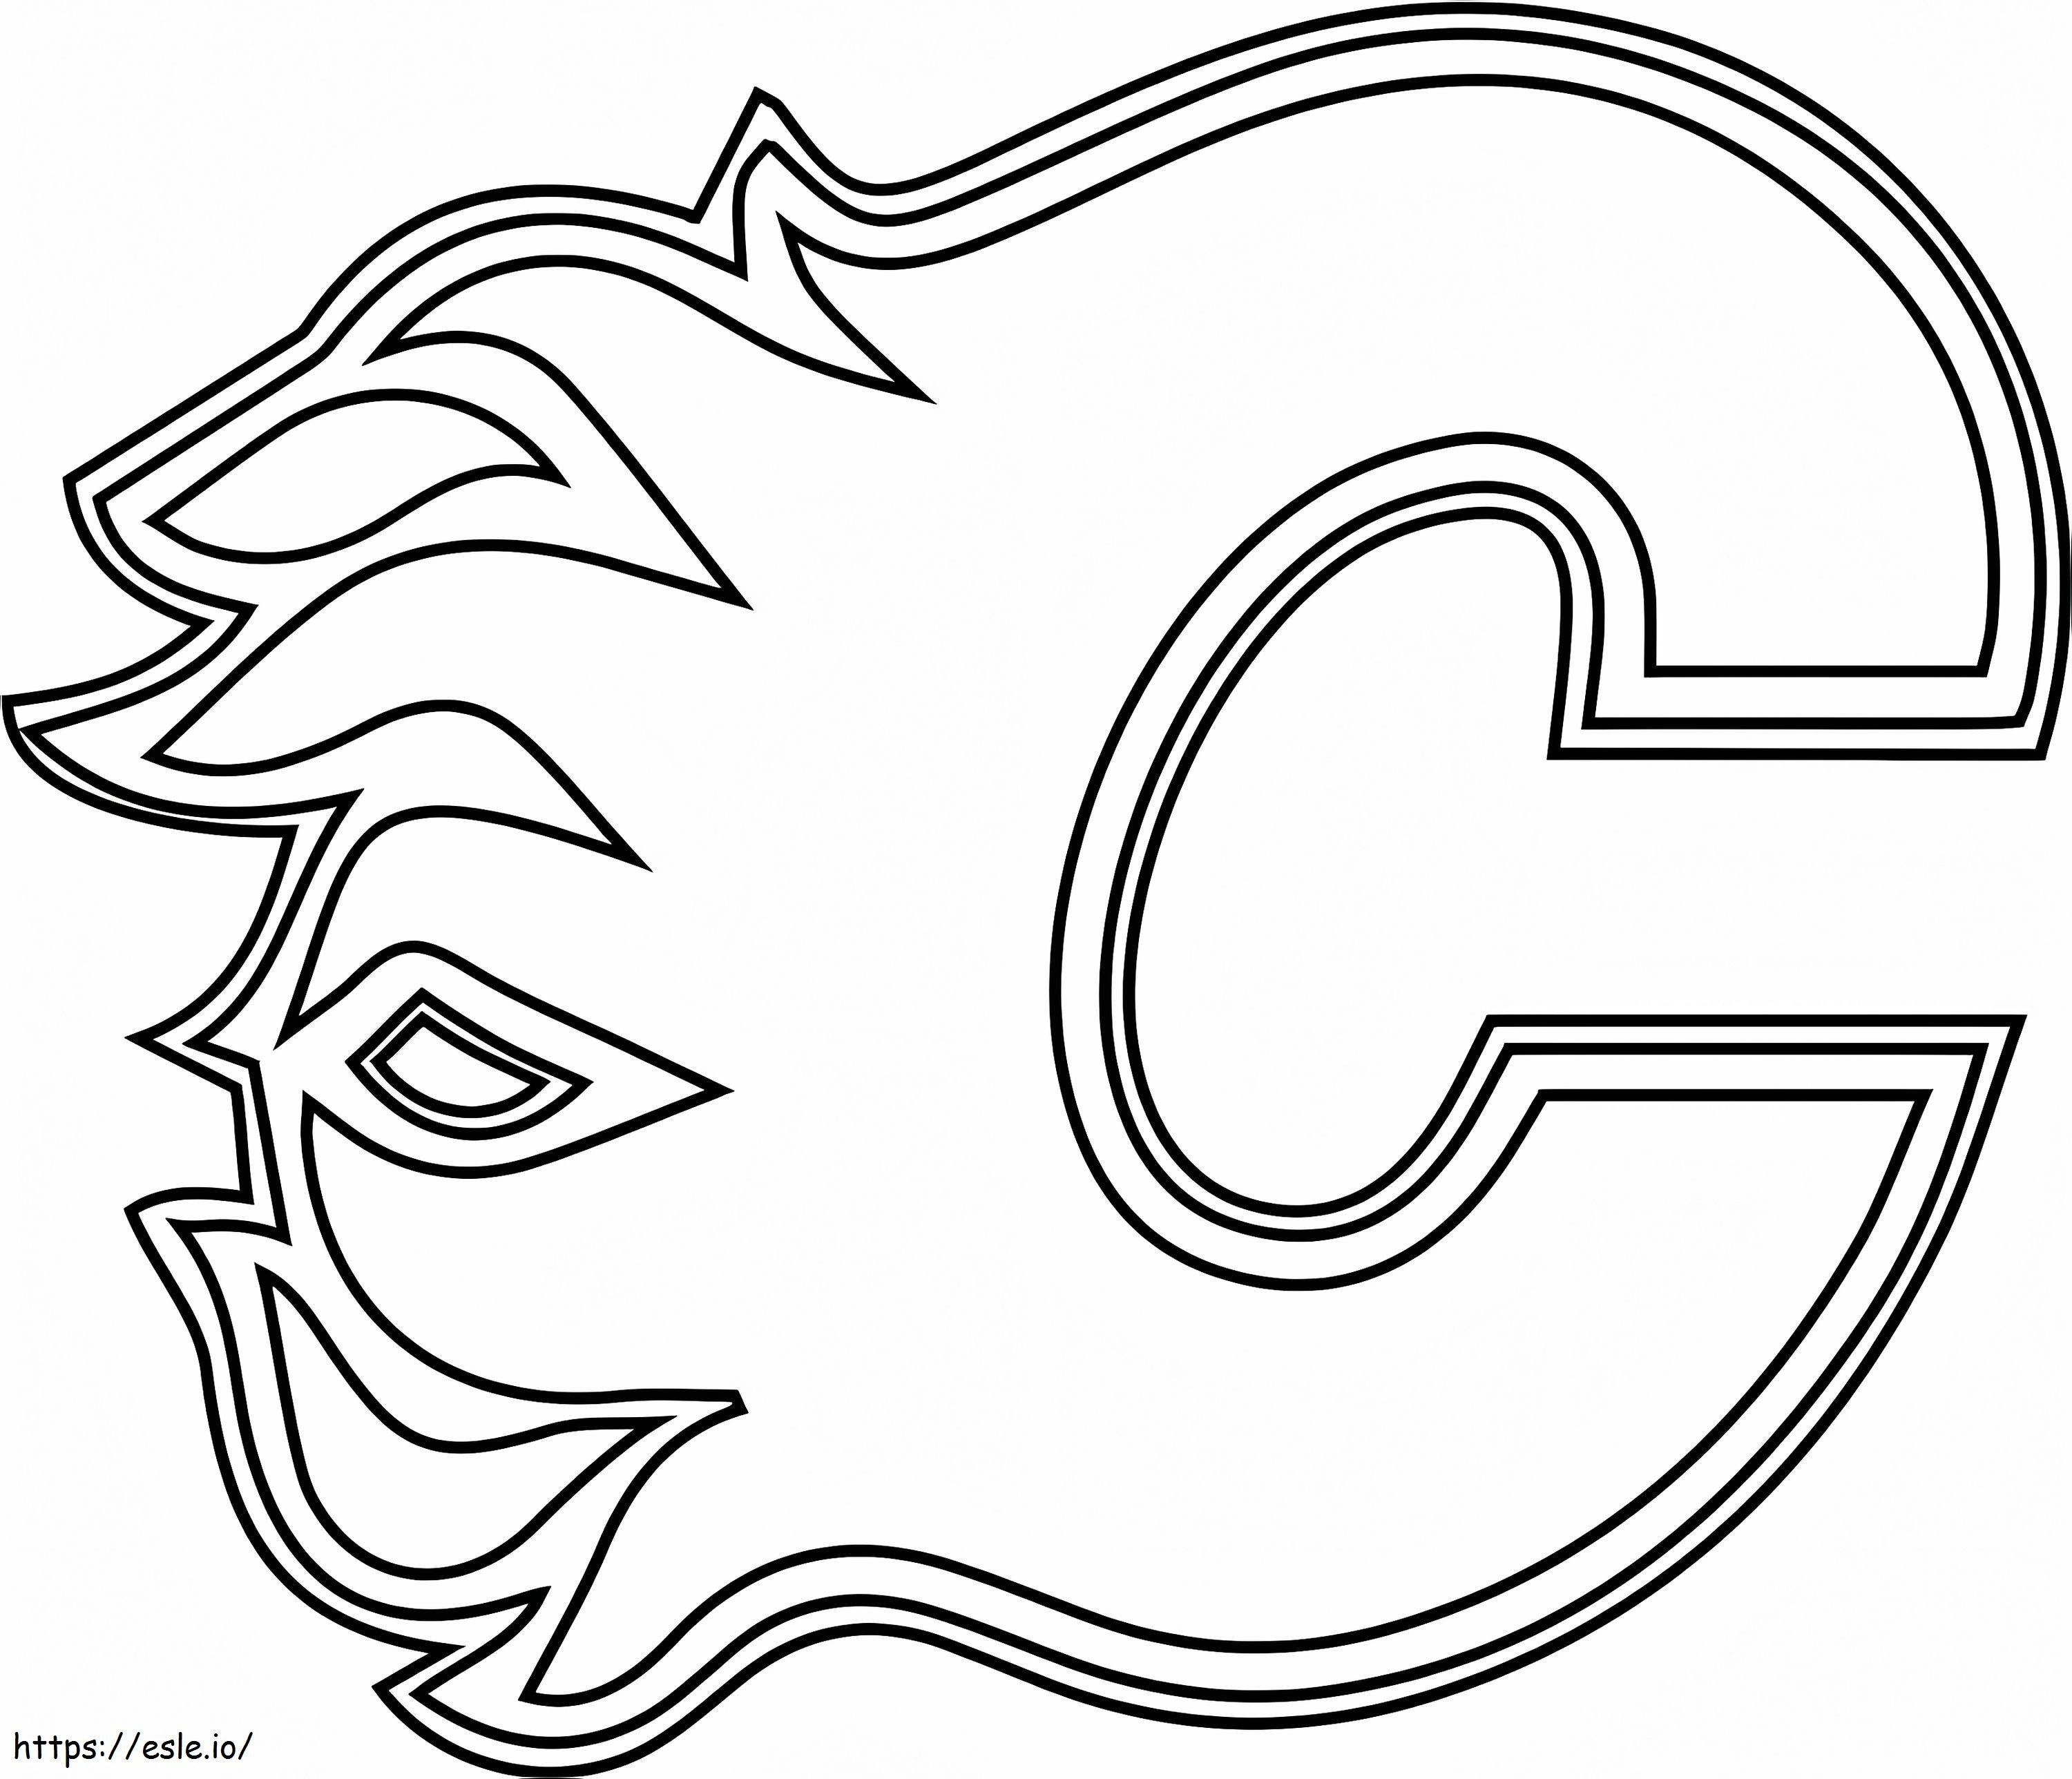 Coloriage Logo des Flames de Calgary à imprimer dessin